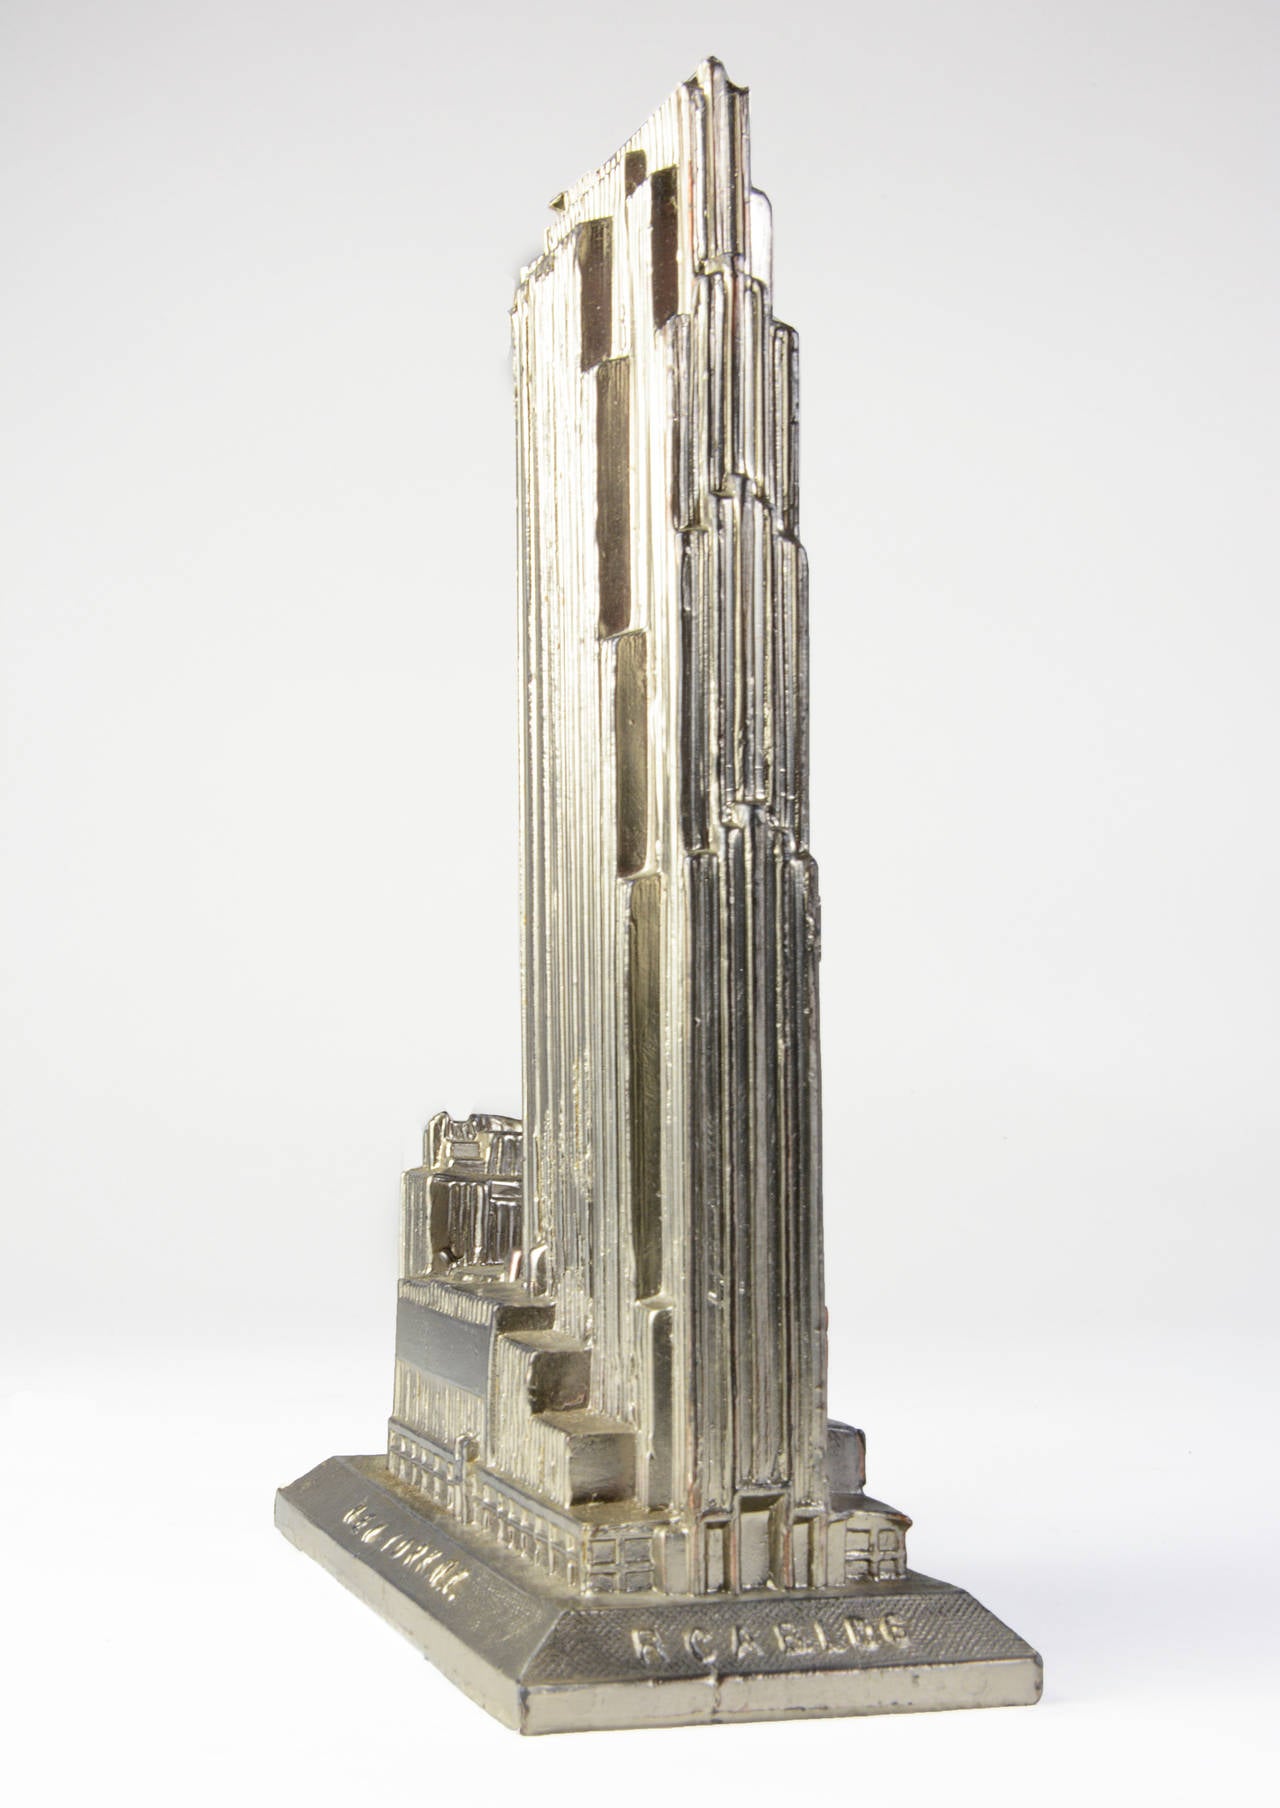 American Scarce Art Deco Souvenir Architectural Model of the RCA Building, New York